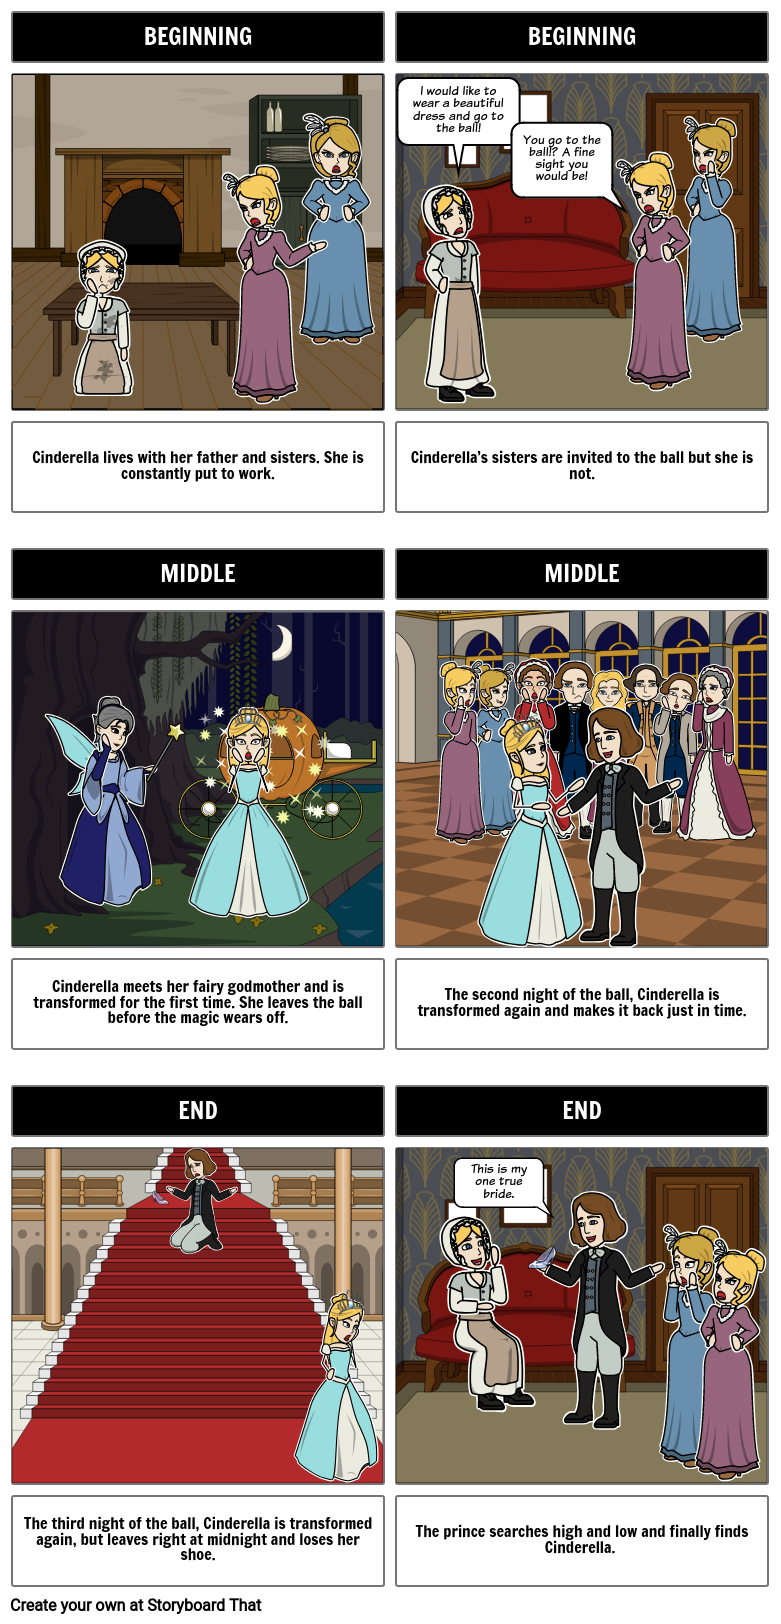 Structure Of Cinderella Story - Design Talk